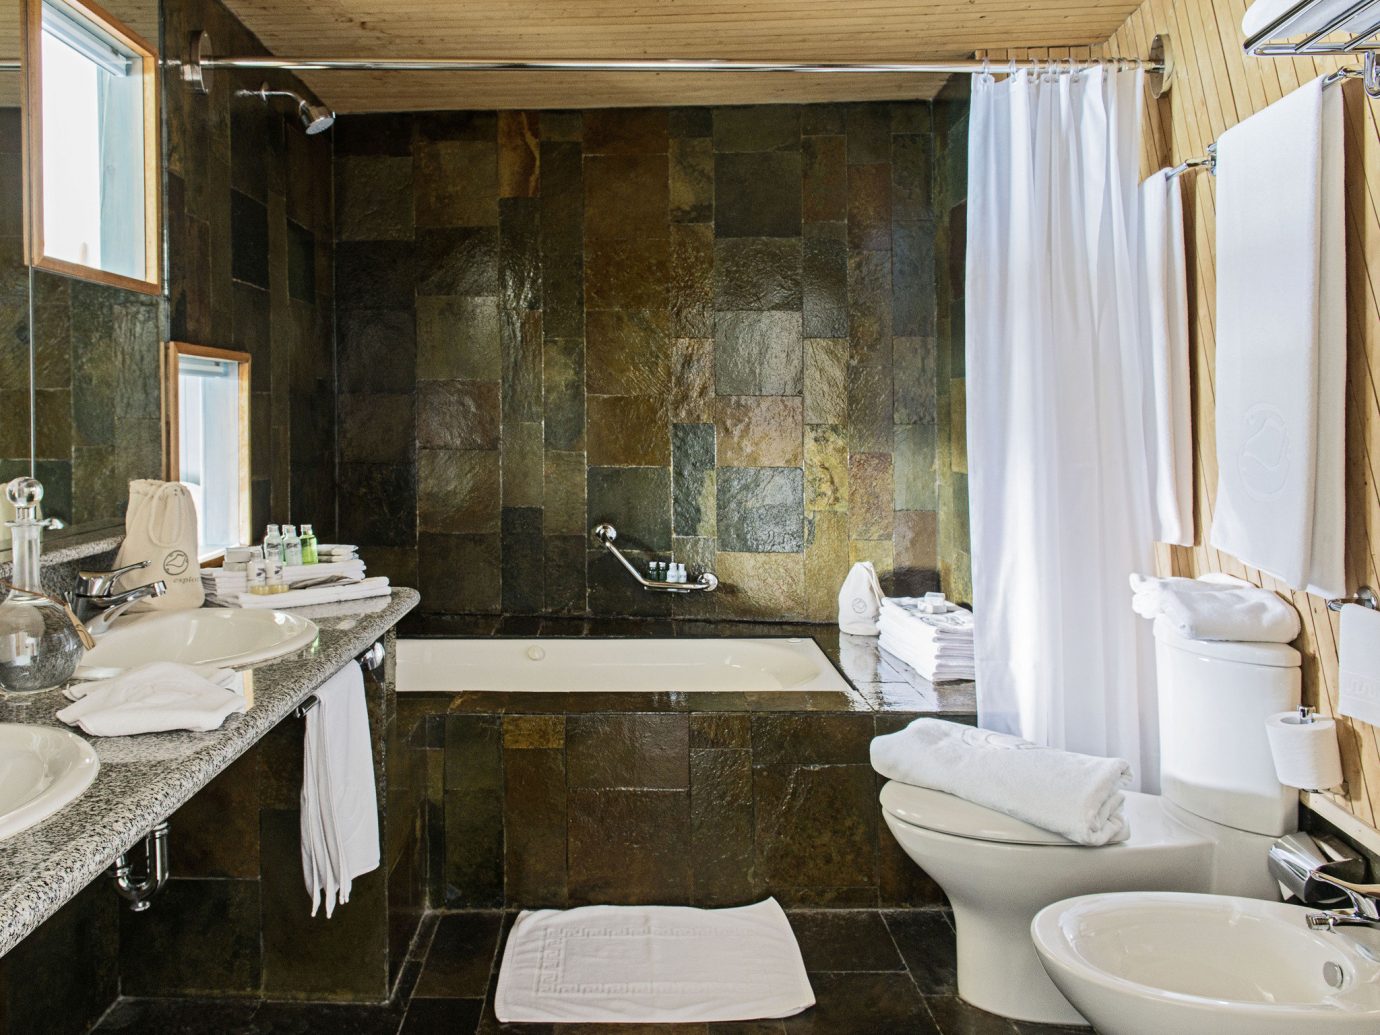 All-Inclusive Resorts Hotels Luxury Travel indoor bathroom sink room window property estate interior design home floor Suite counter Design toilet tub bathtub Bath tiled